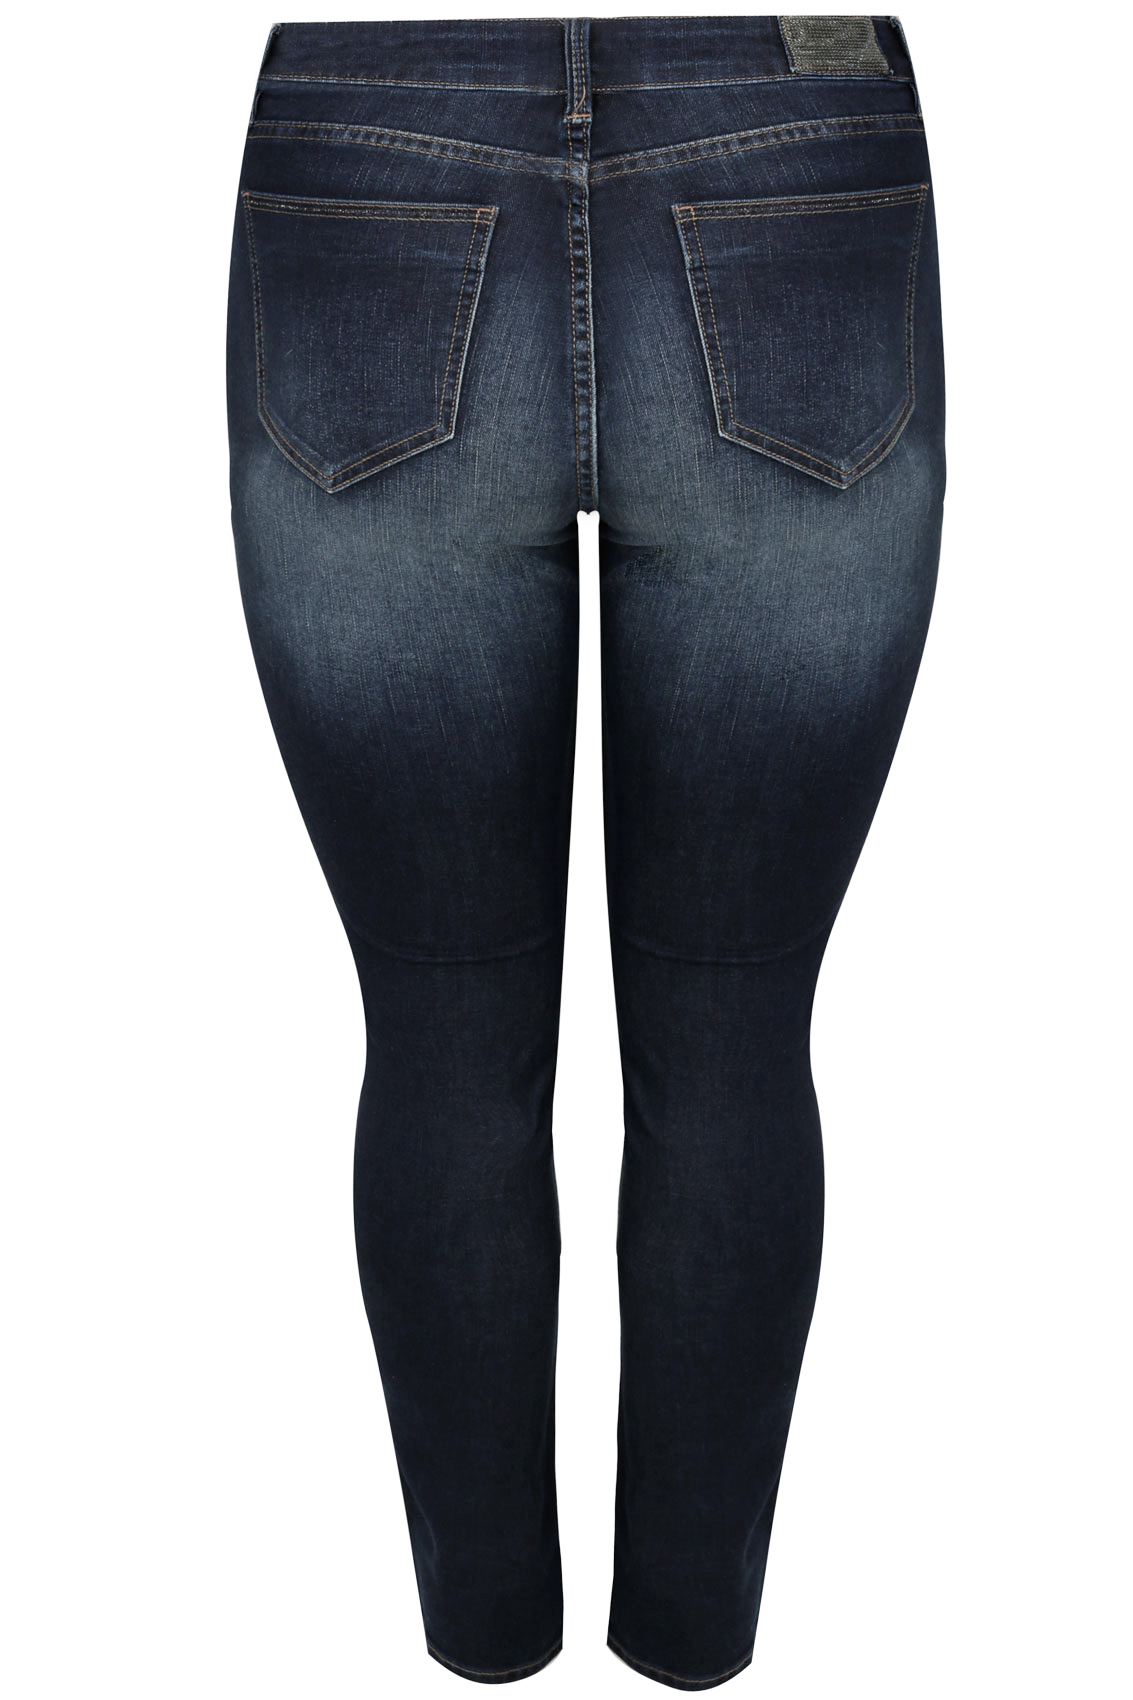 PAPRIKA Dark Denim Slim Fit Extra Long Jeans With Zip Pockets - 31